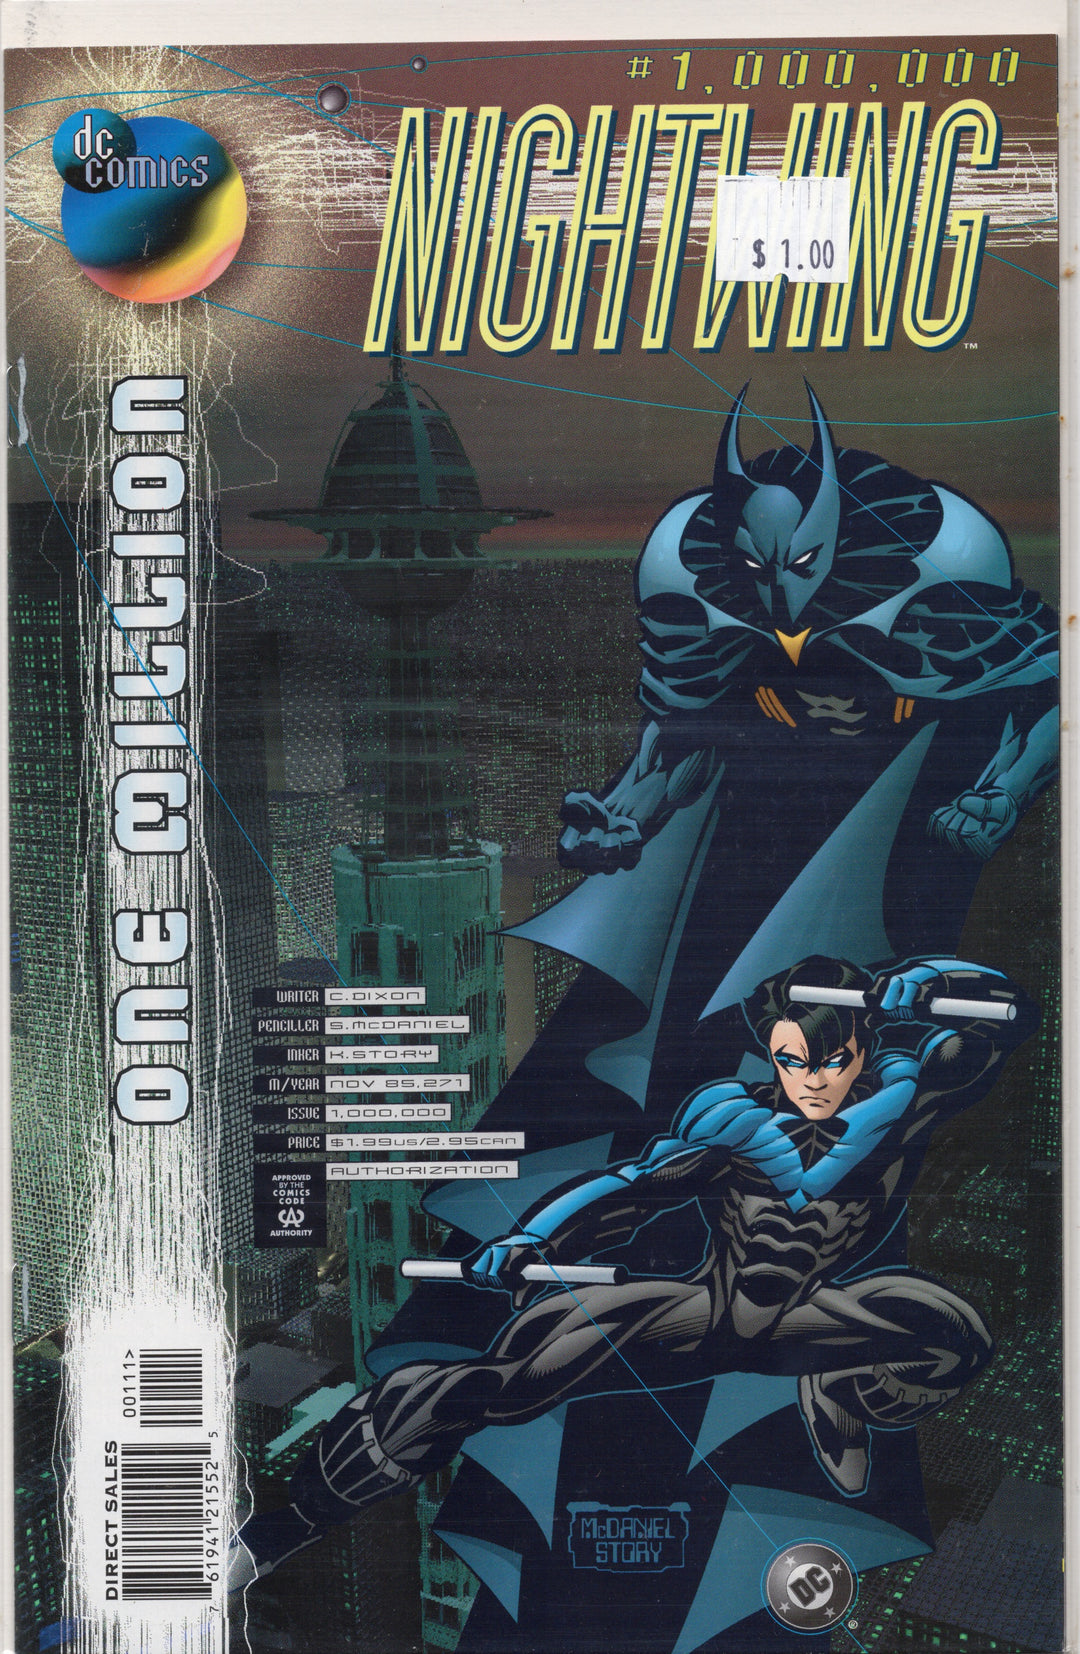 DC One Million Nightwing #1